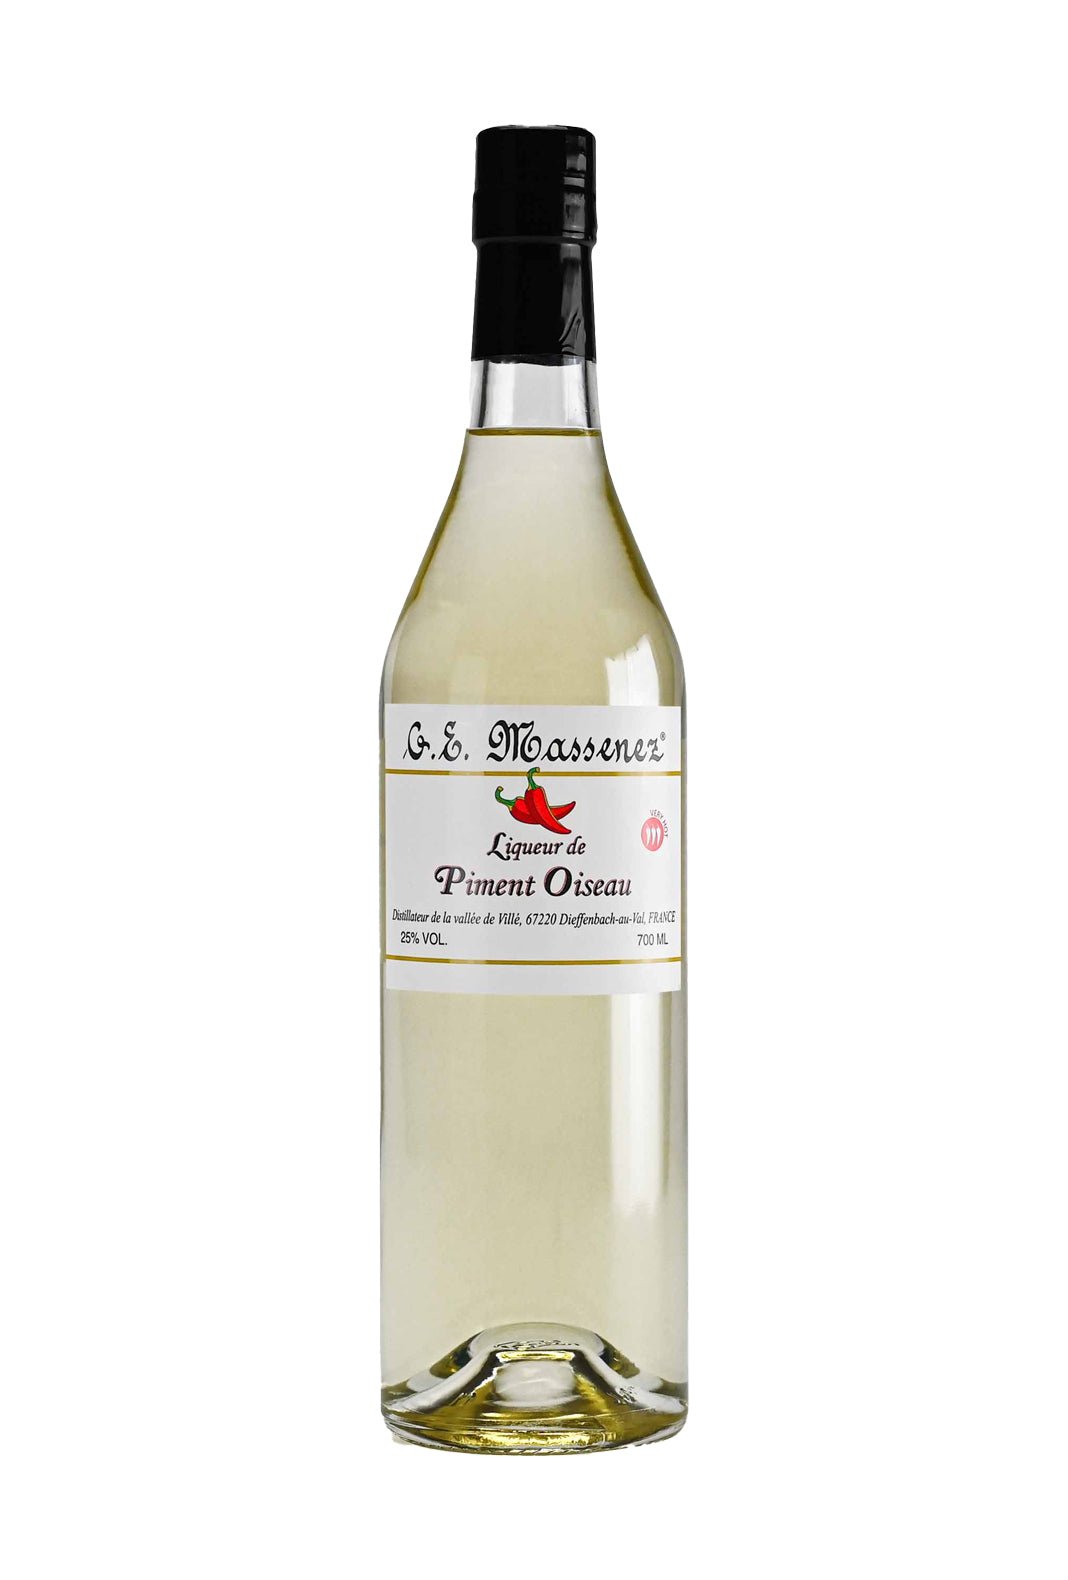 Massenez Birdseye Chilli Liqueur 25% 700ml | Liqueurs | Shop online at Spirits of France